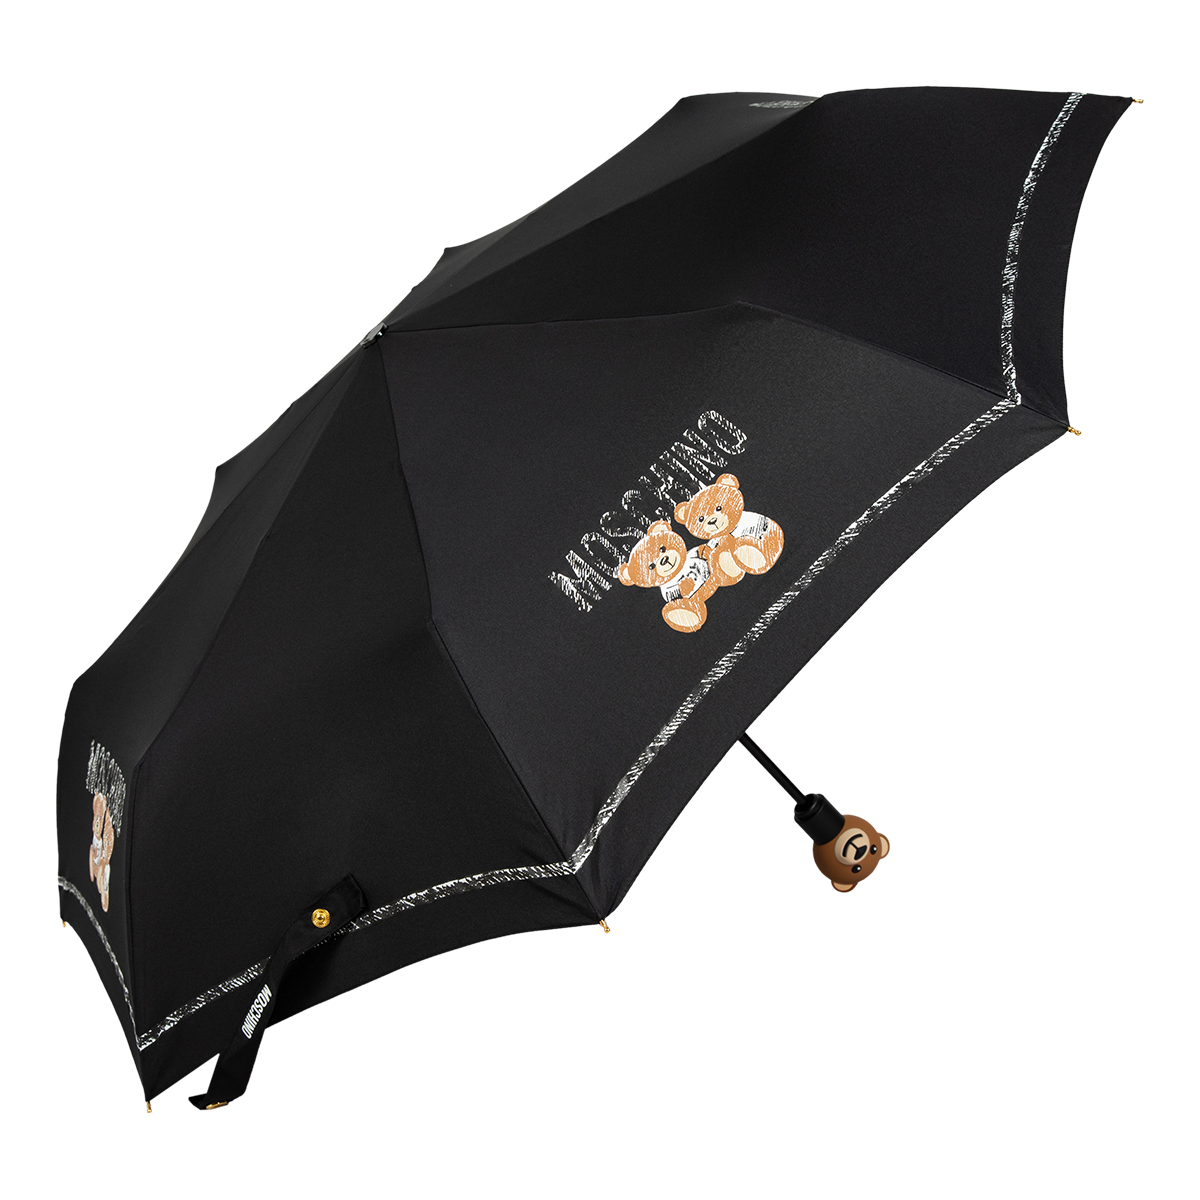 Зонт складной Moschino 8169-OCA 2 bears Black M/8169-OCA/Black